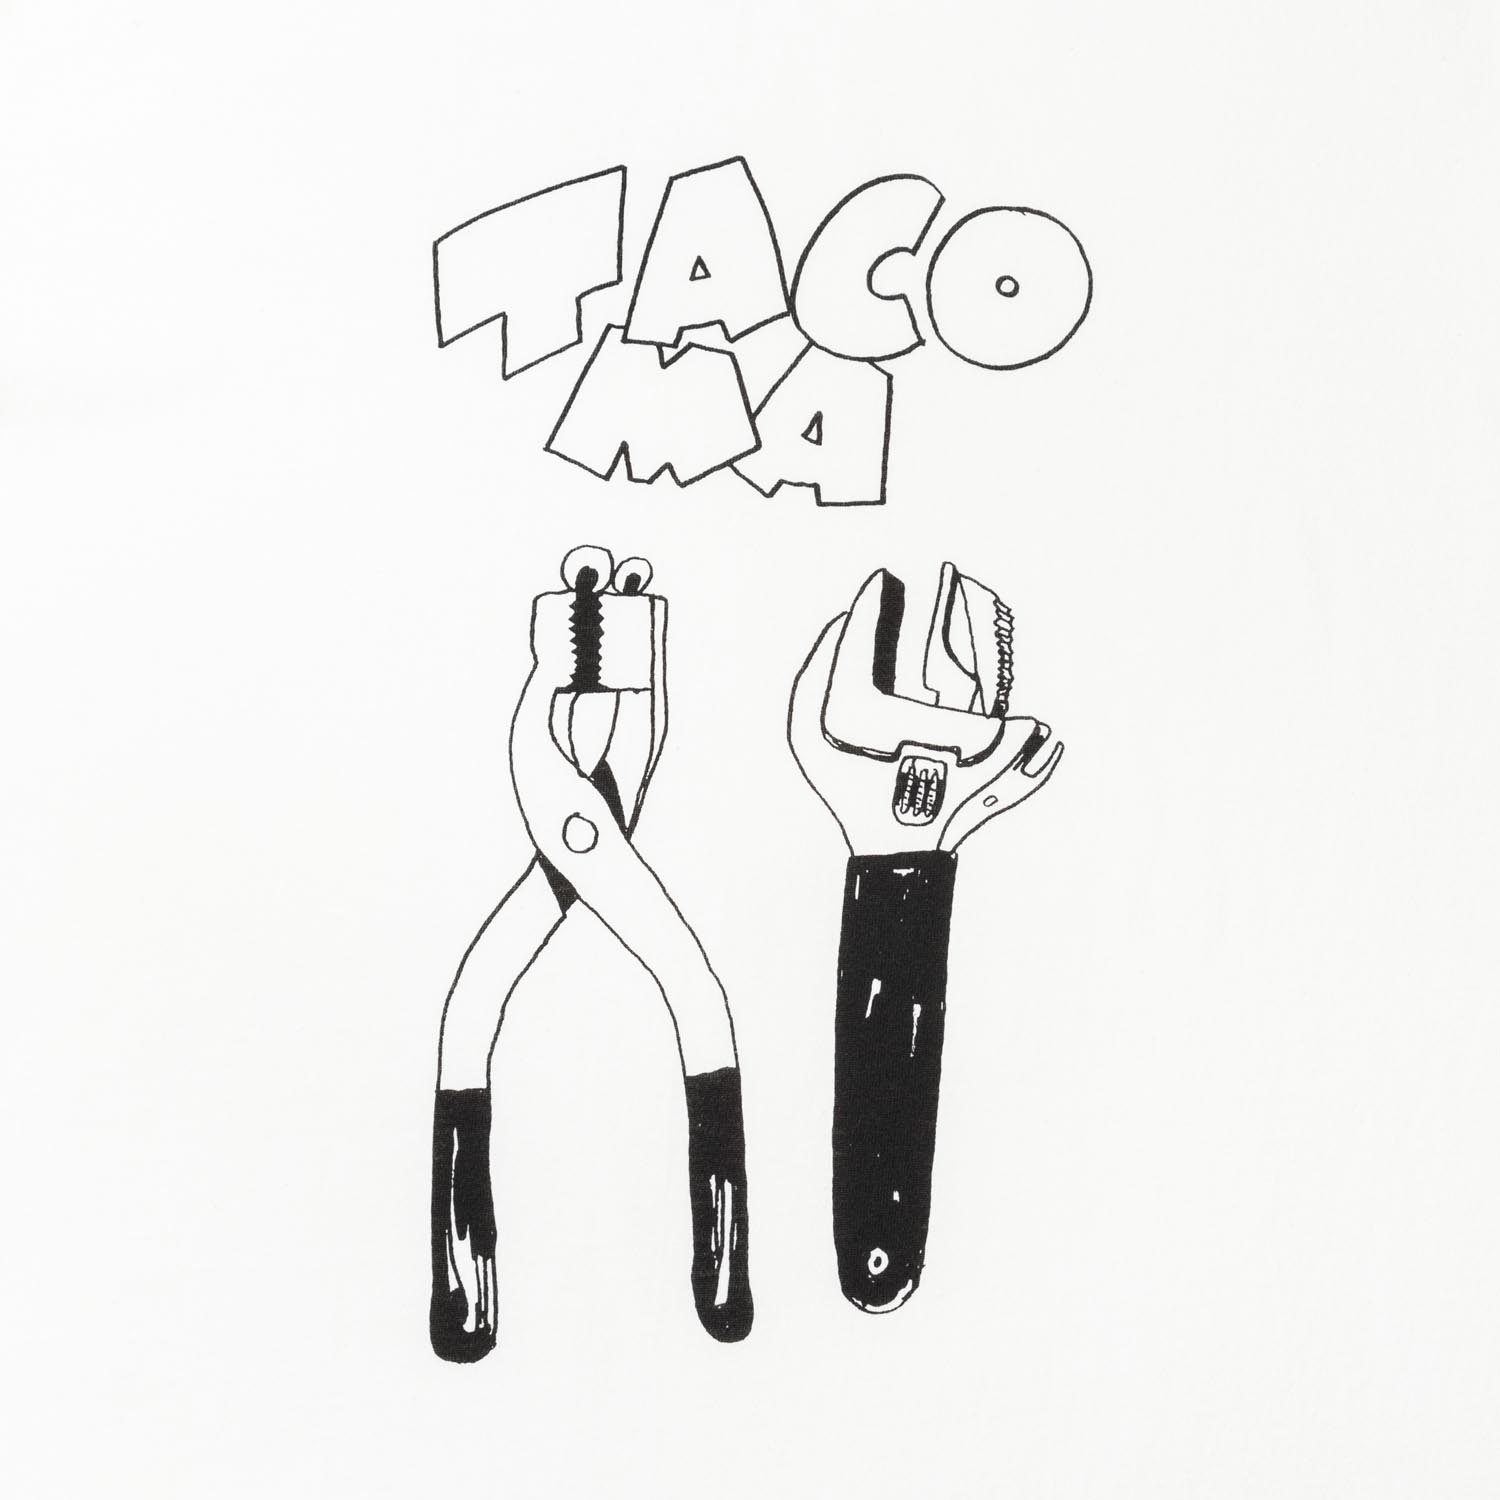 TACOMA TOOLS designed by Tomoo Gokita